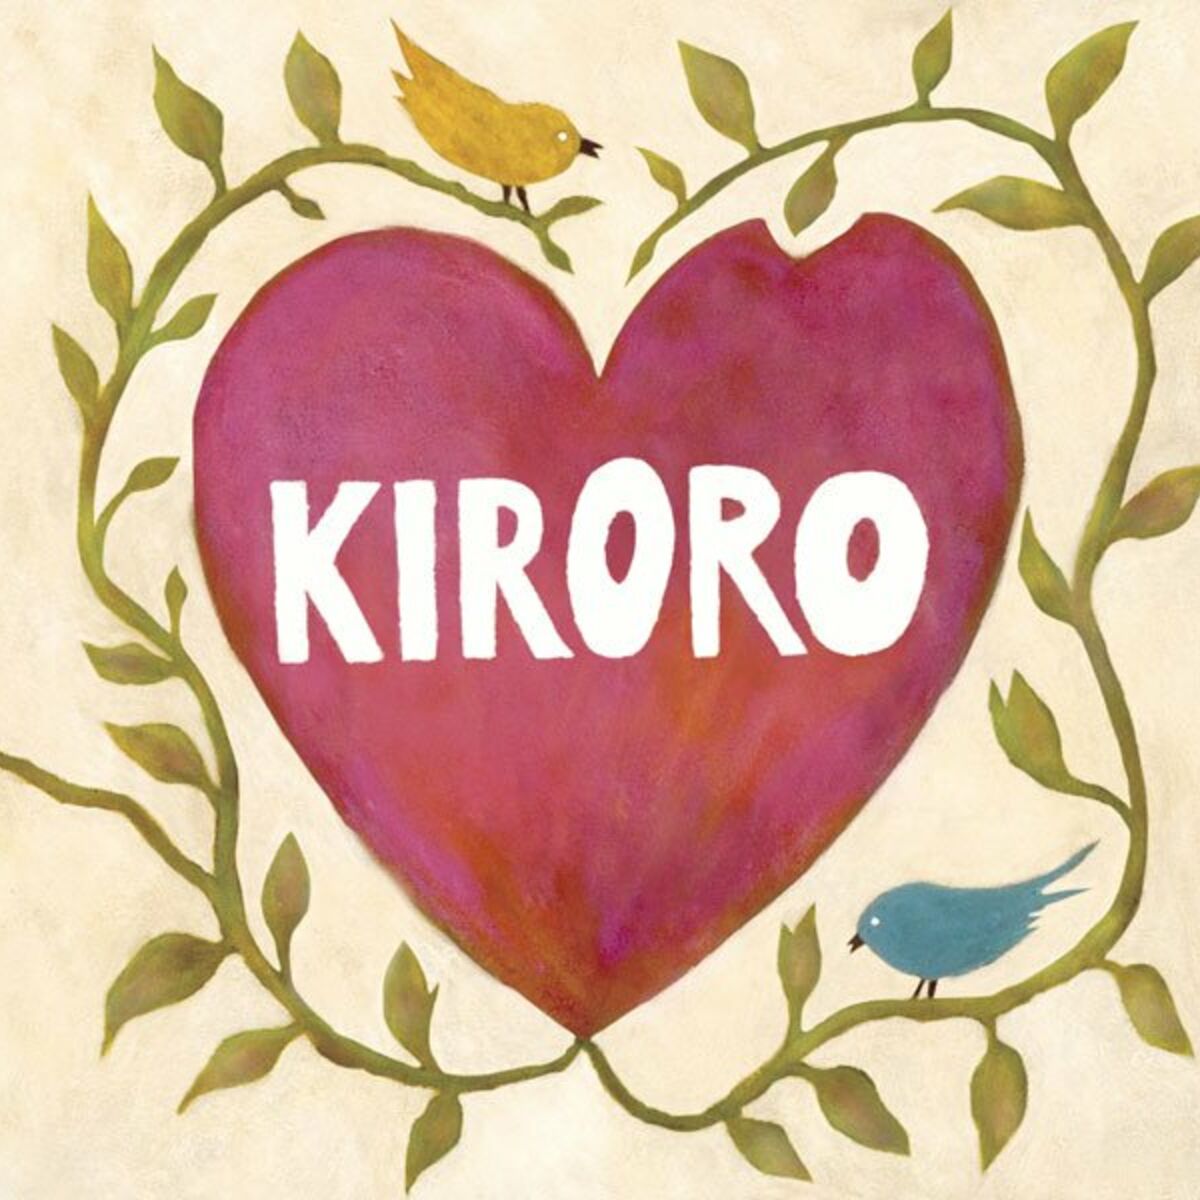 Kiroro: albums, songs, playlists | Listen on Deezer